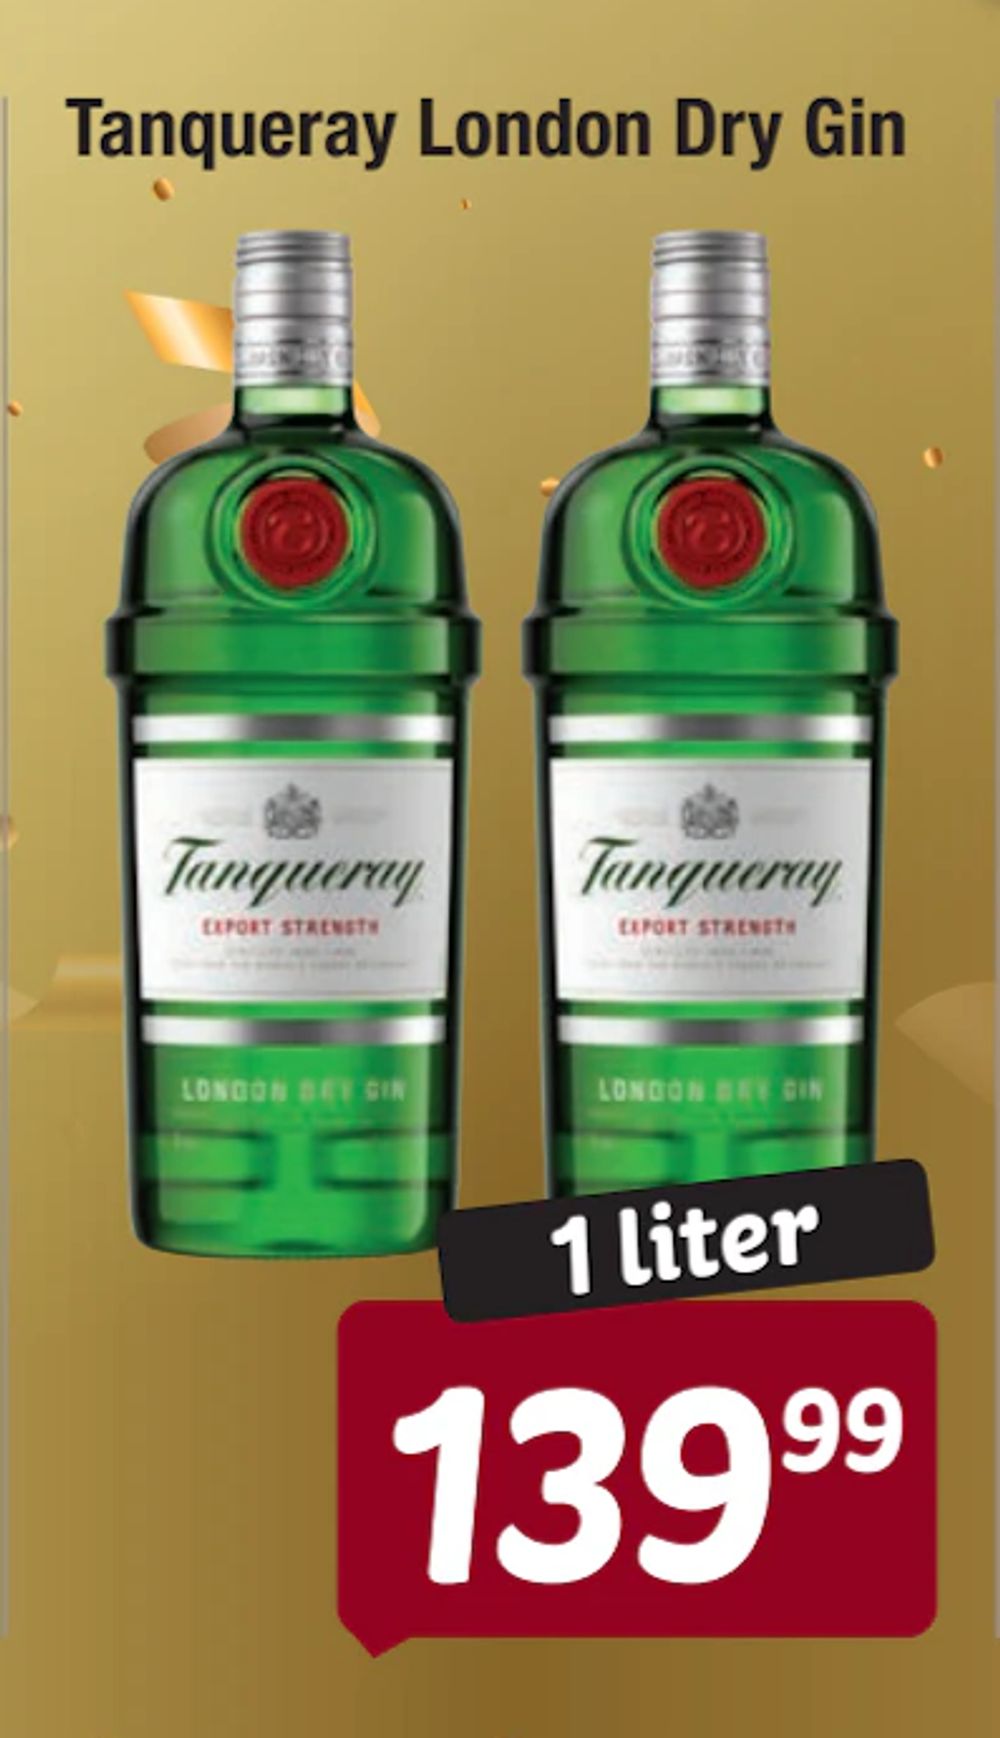 Tilbud på Tanqueray London Dry Gin fra fakta Tyskland til 139,99 kr.